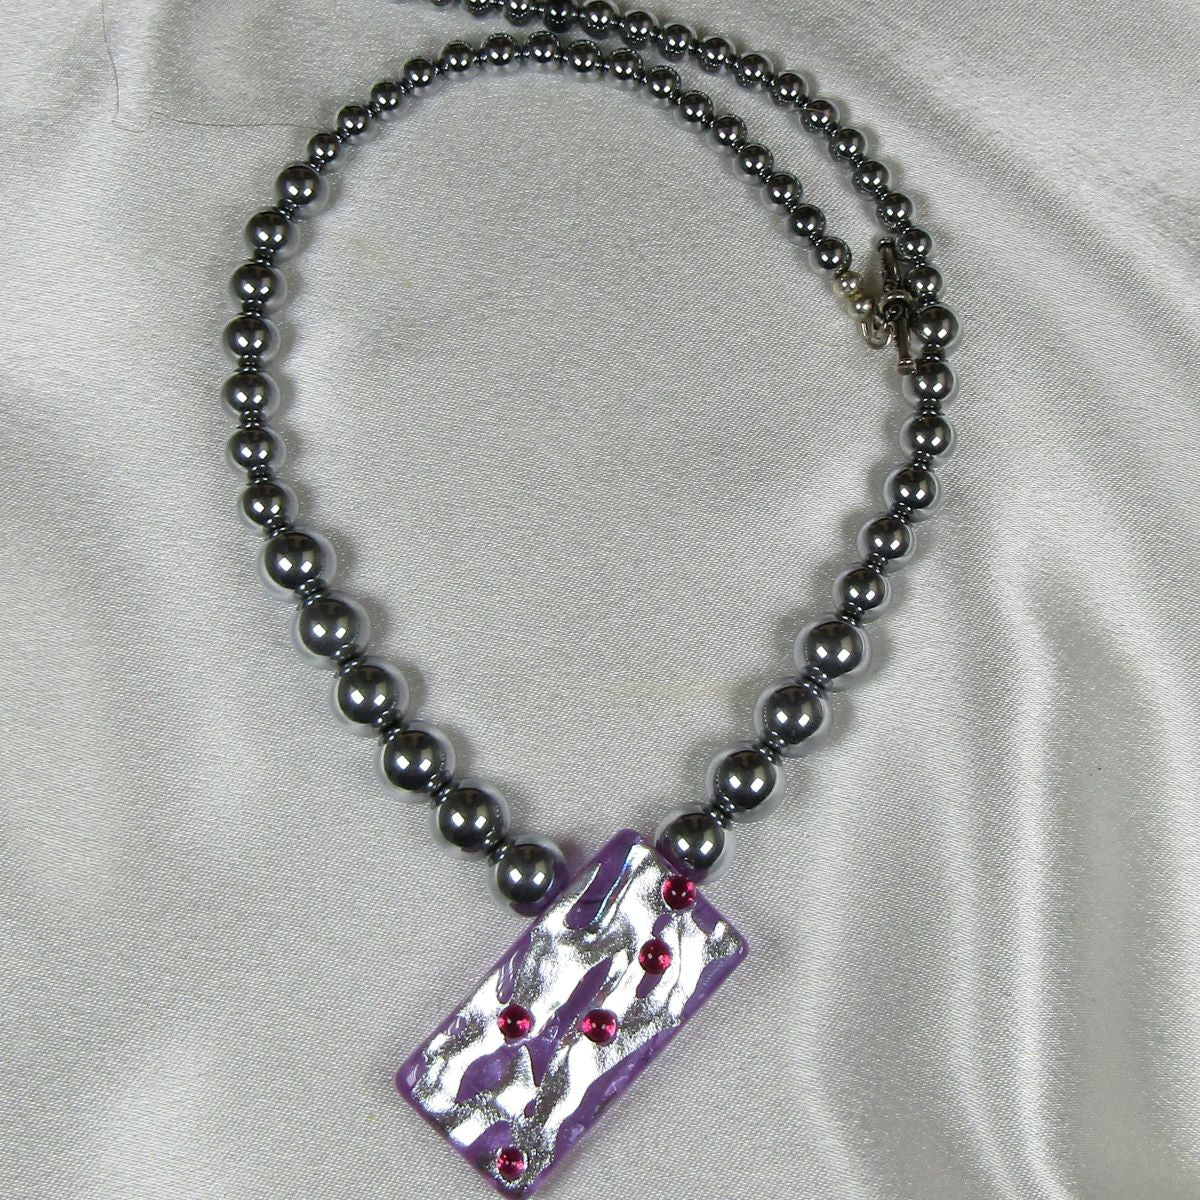 Silvery Handmade Artisan Glass Bead Lampwork Pendant Necklace  - VP's Jewelry